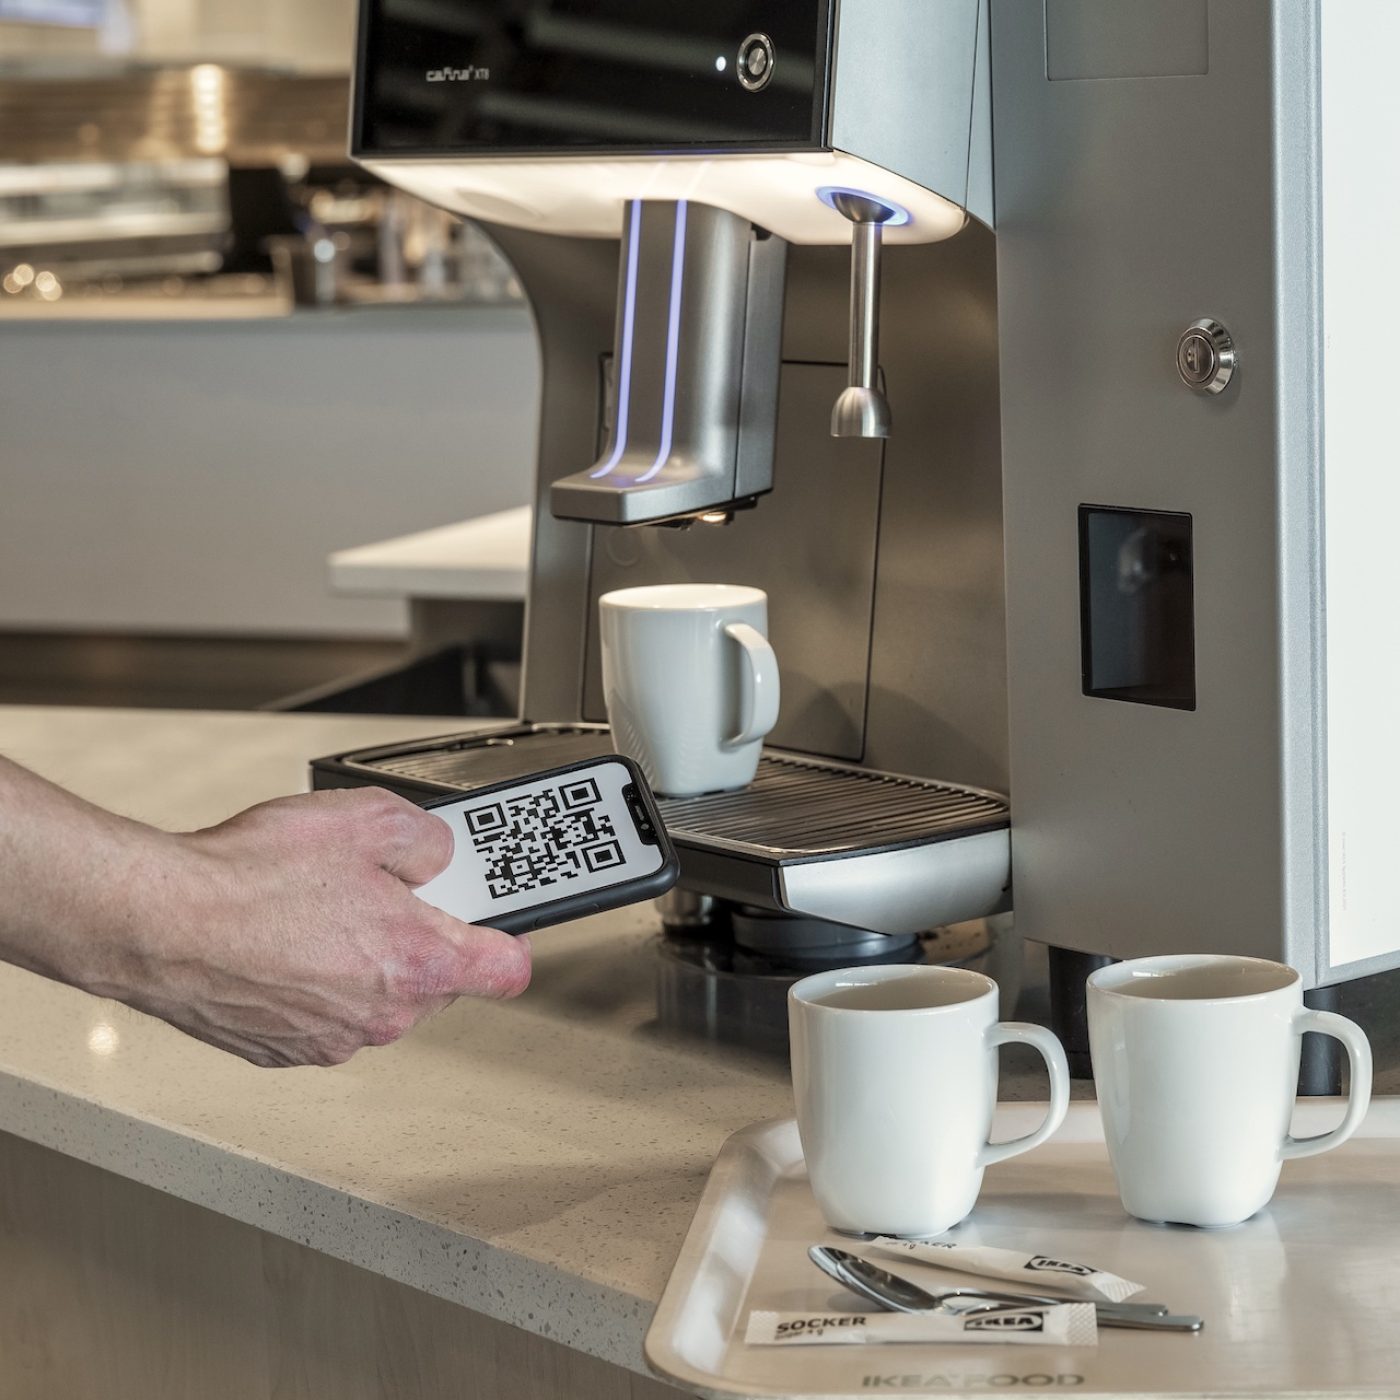 smartnow_square_qr-scan-coffee-machine_self-service_vending_machine